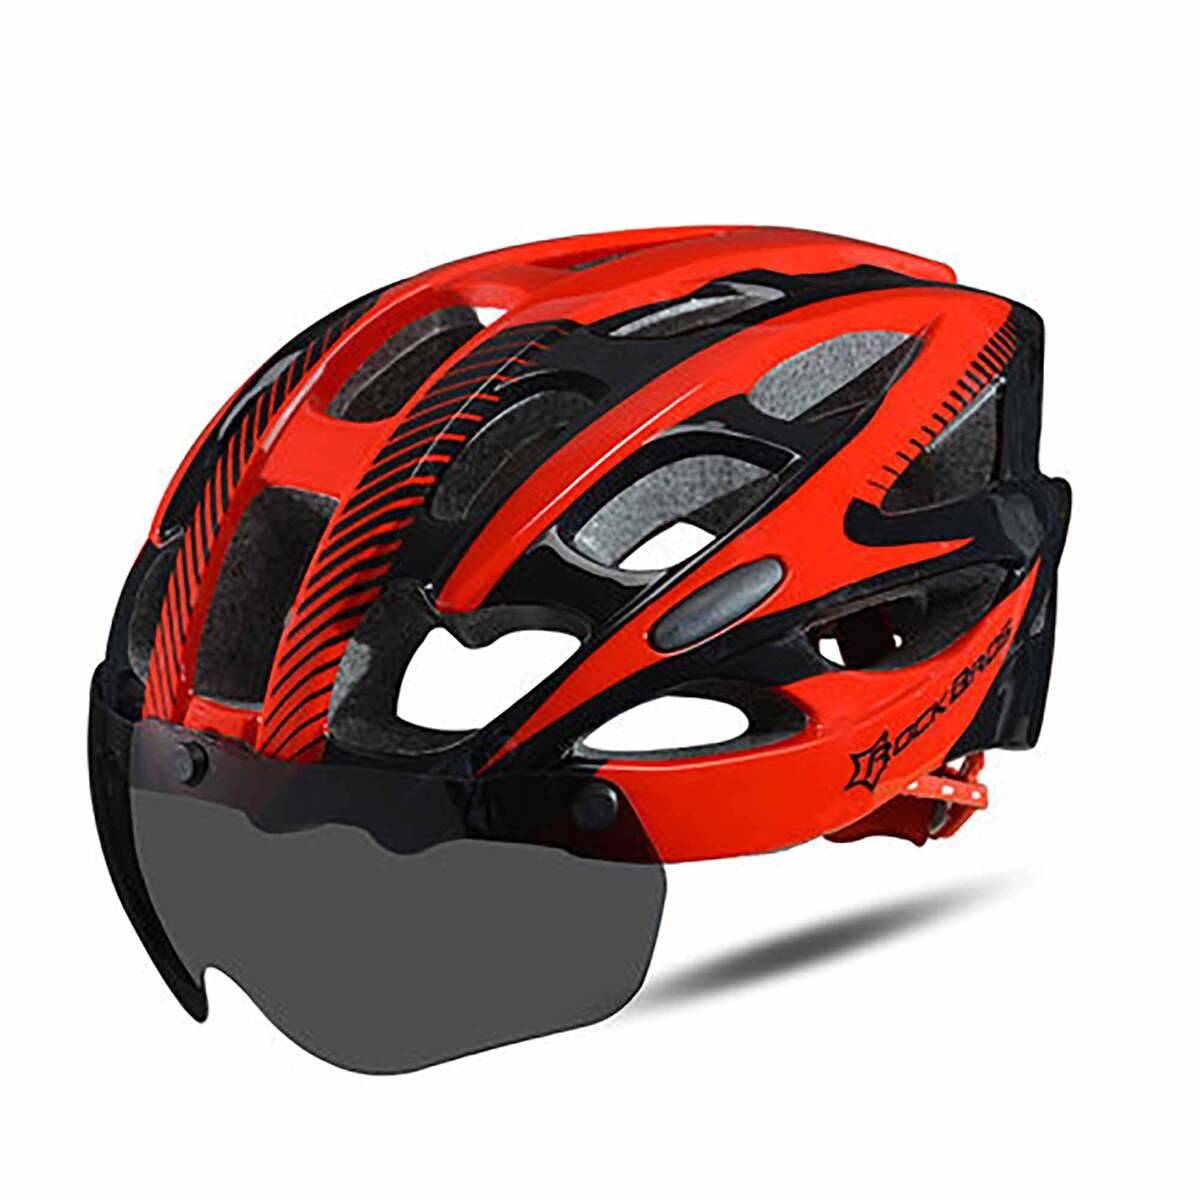 ROCKBROS Cycling Helmet WT027S-BR Black Red